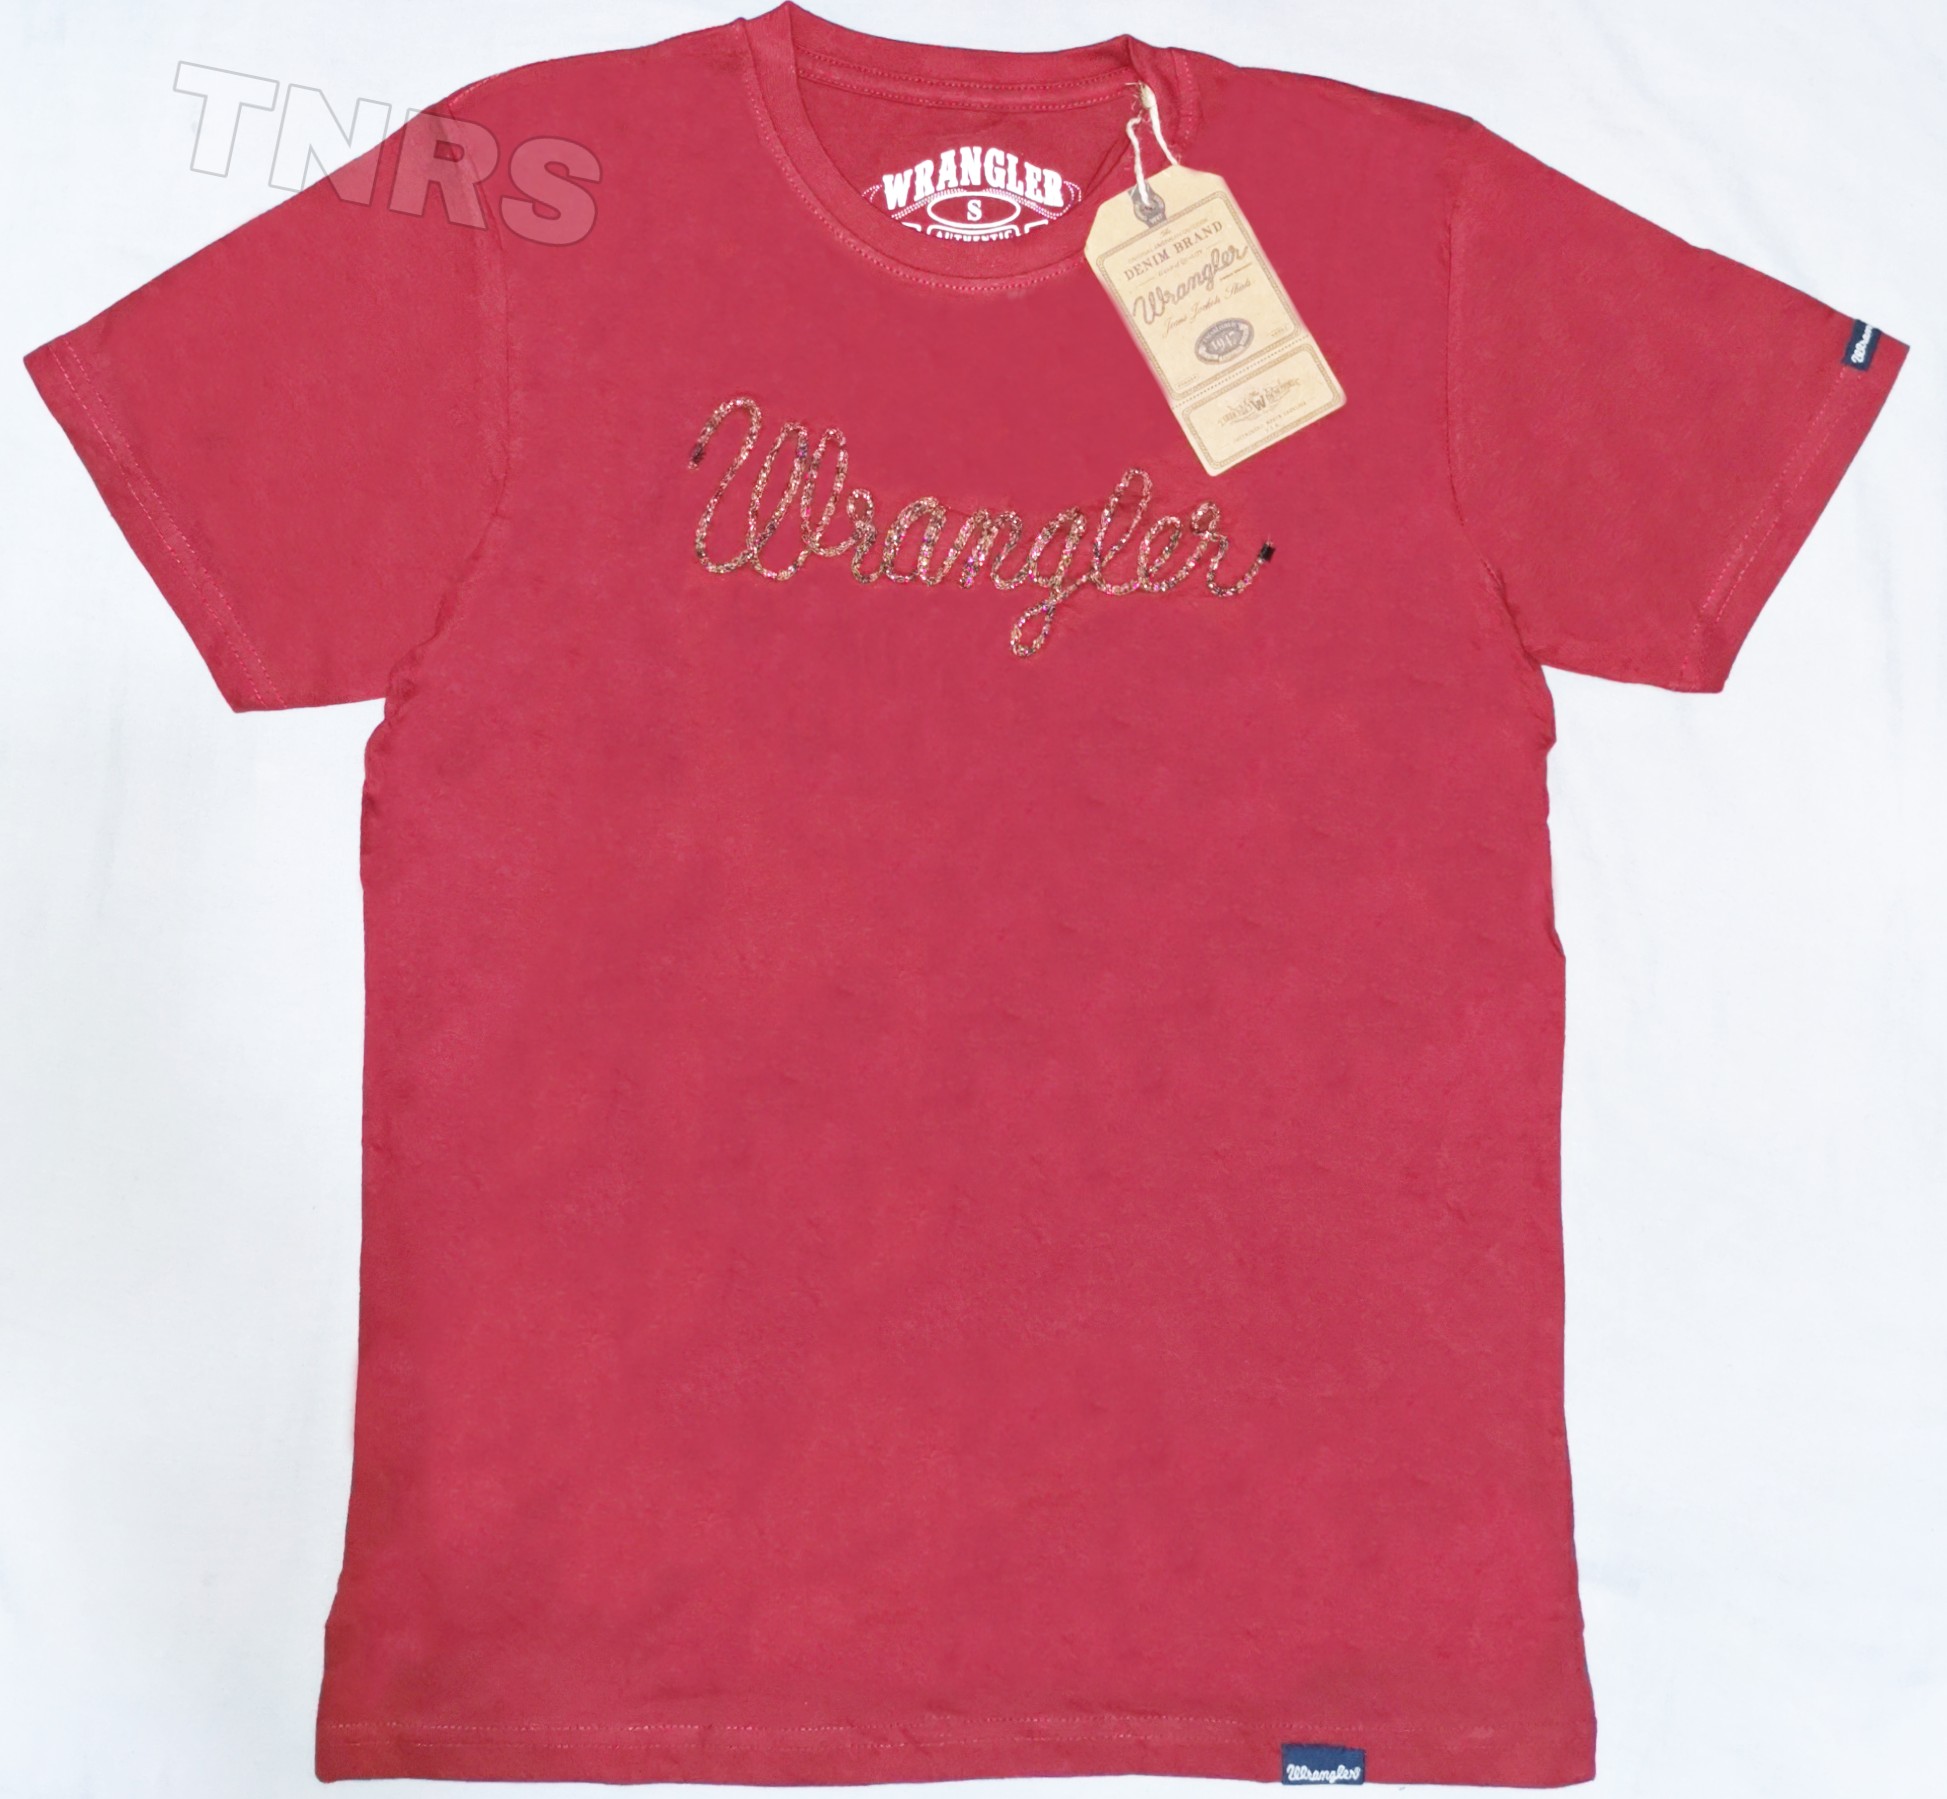 wrangler brand shirts